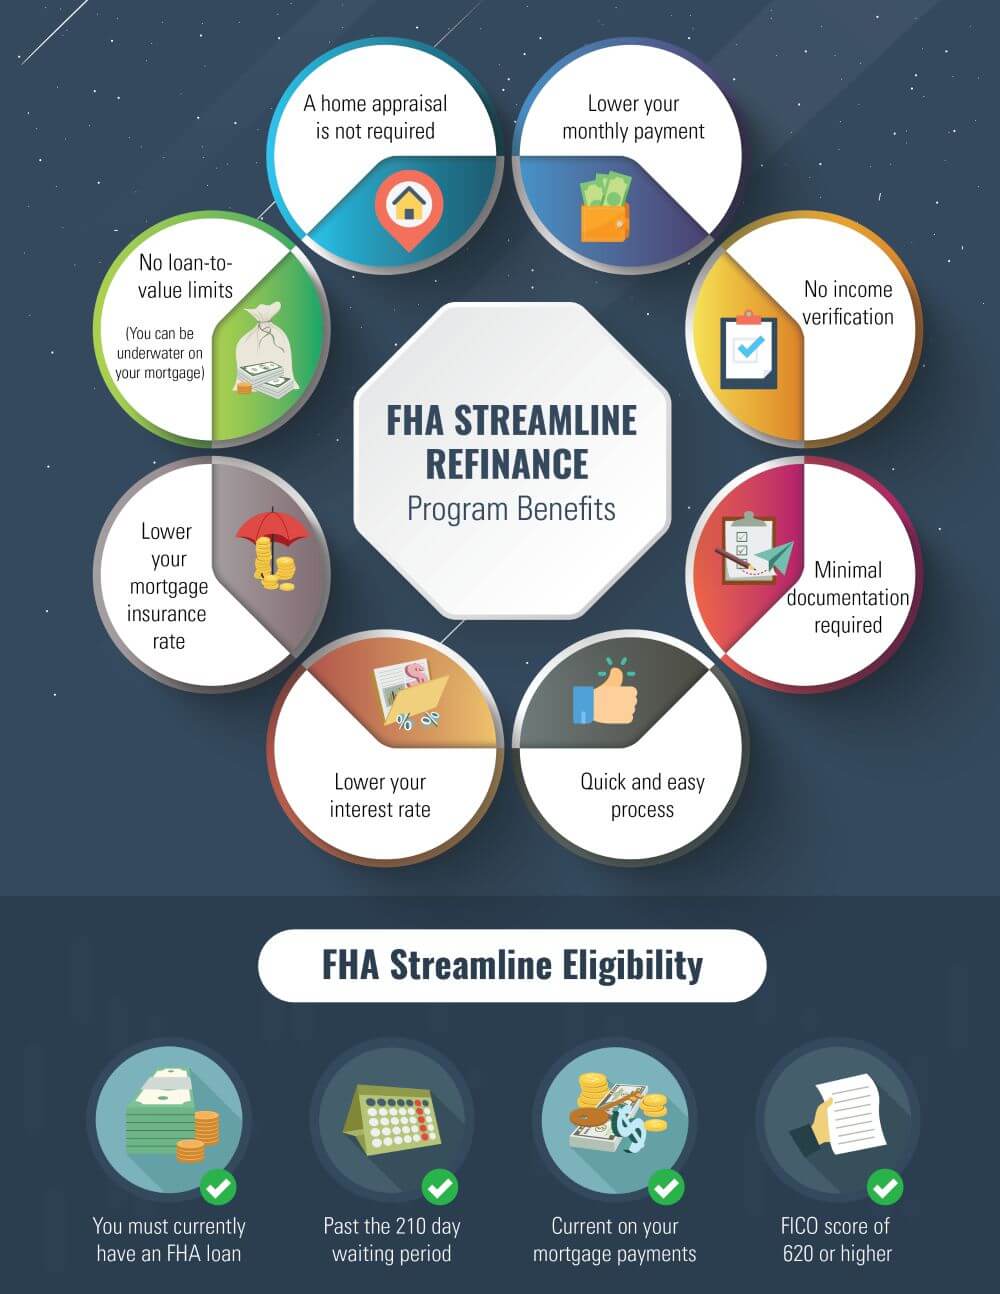 FHA Streamline Refinance Pros and Cons